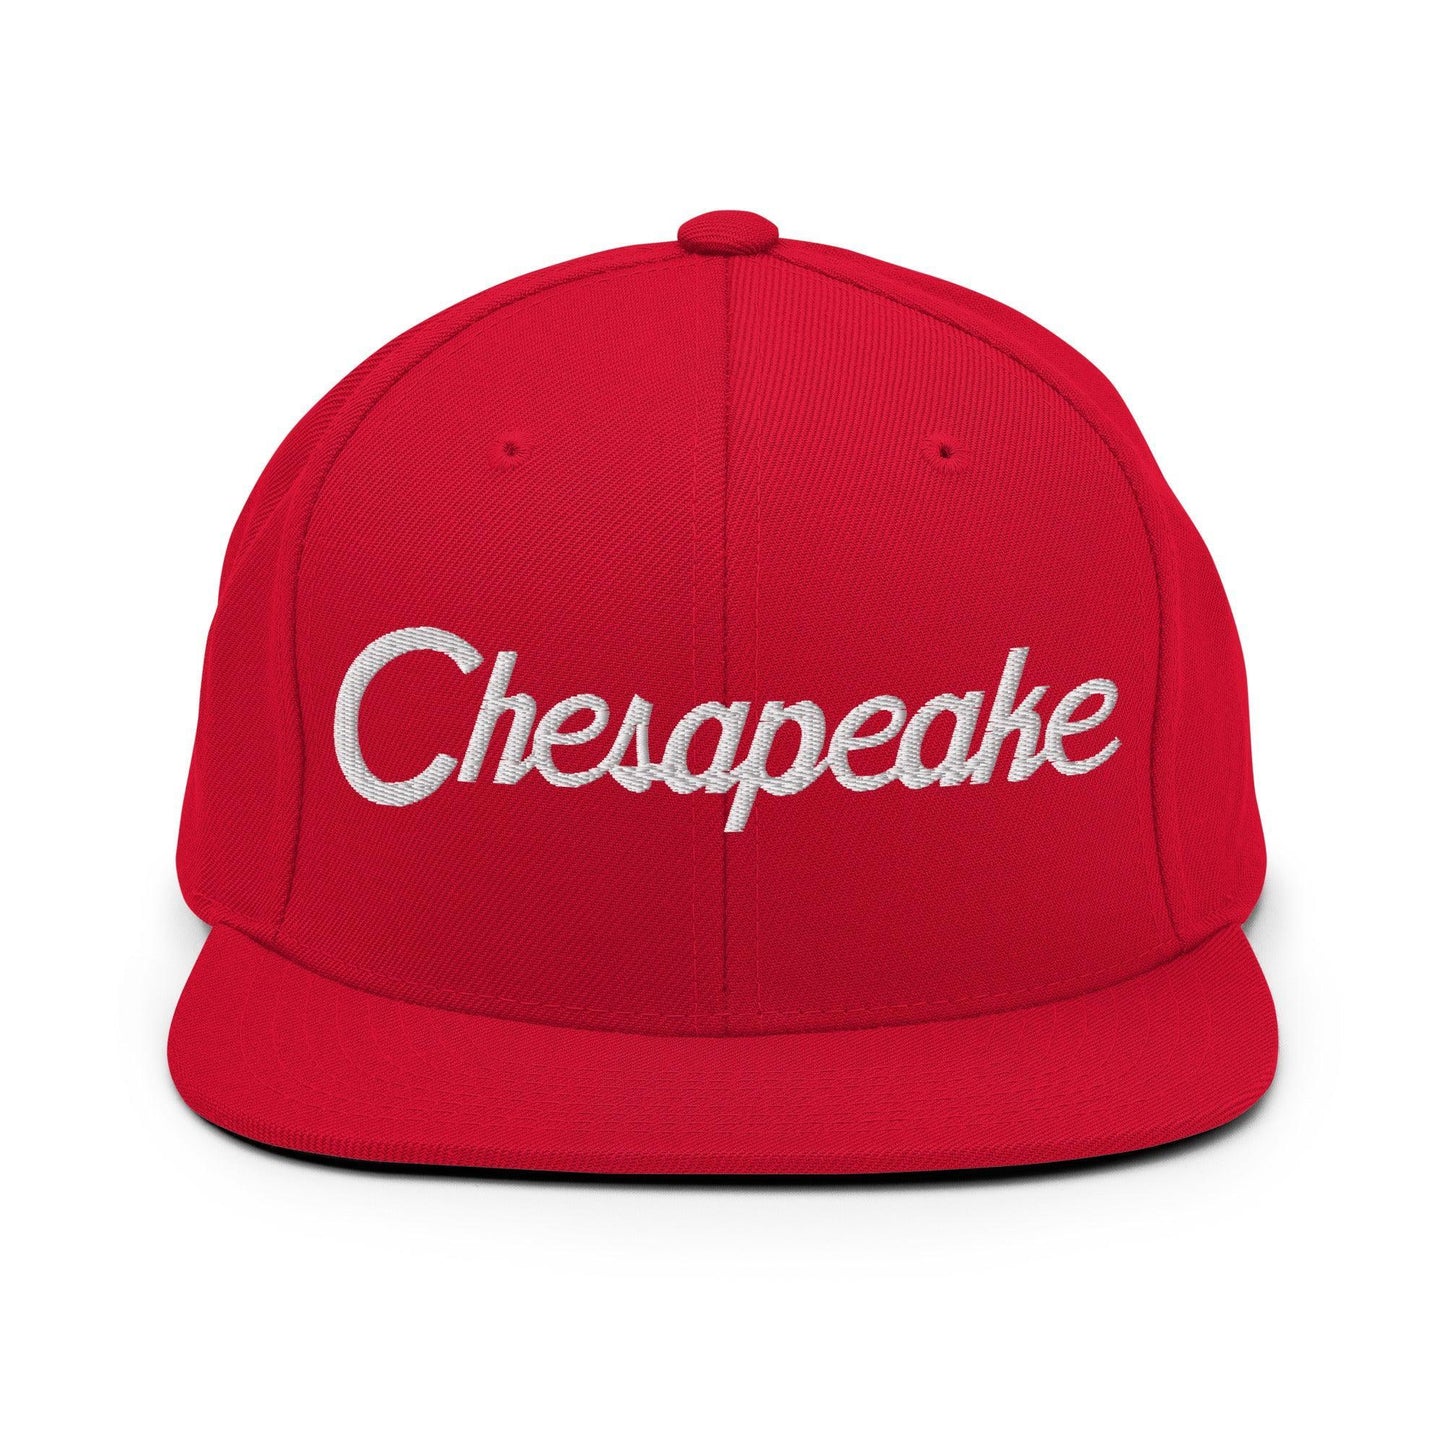 Chesapeake Script Snapback Hat Red